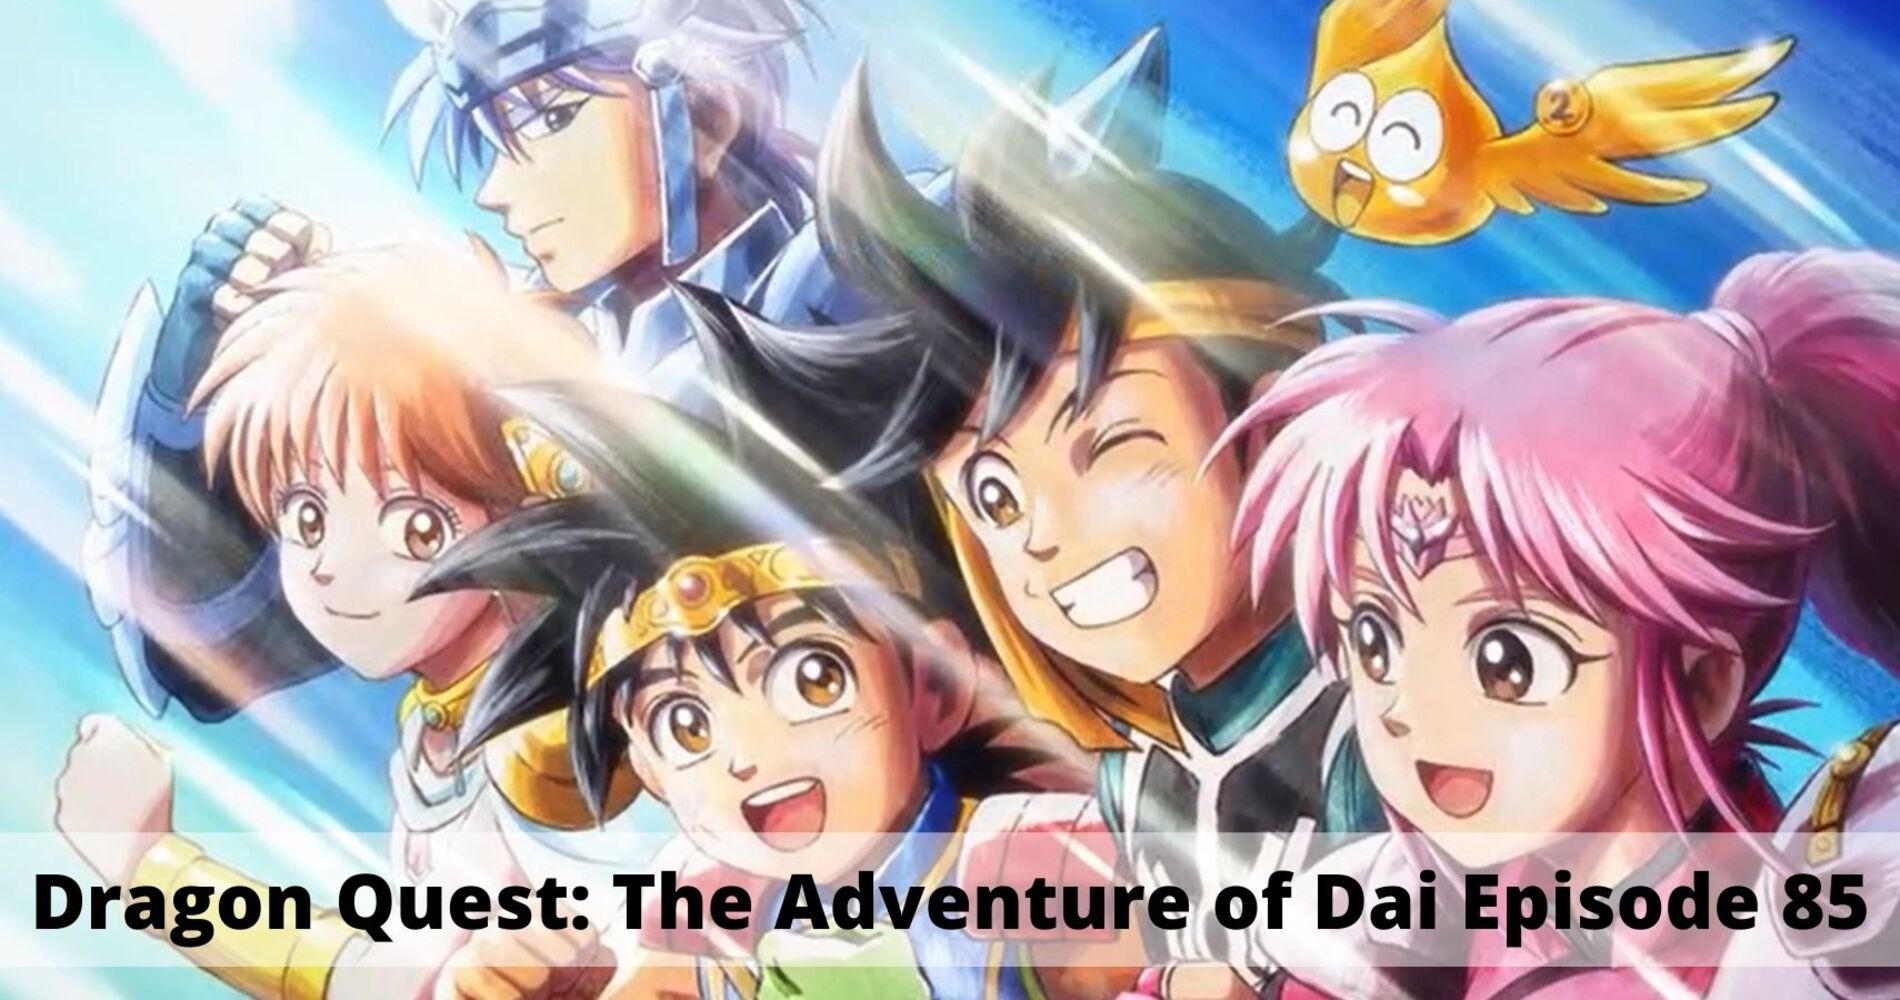 Dragon Quest The Adventure of Dai Episode 85 Release Date